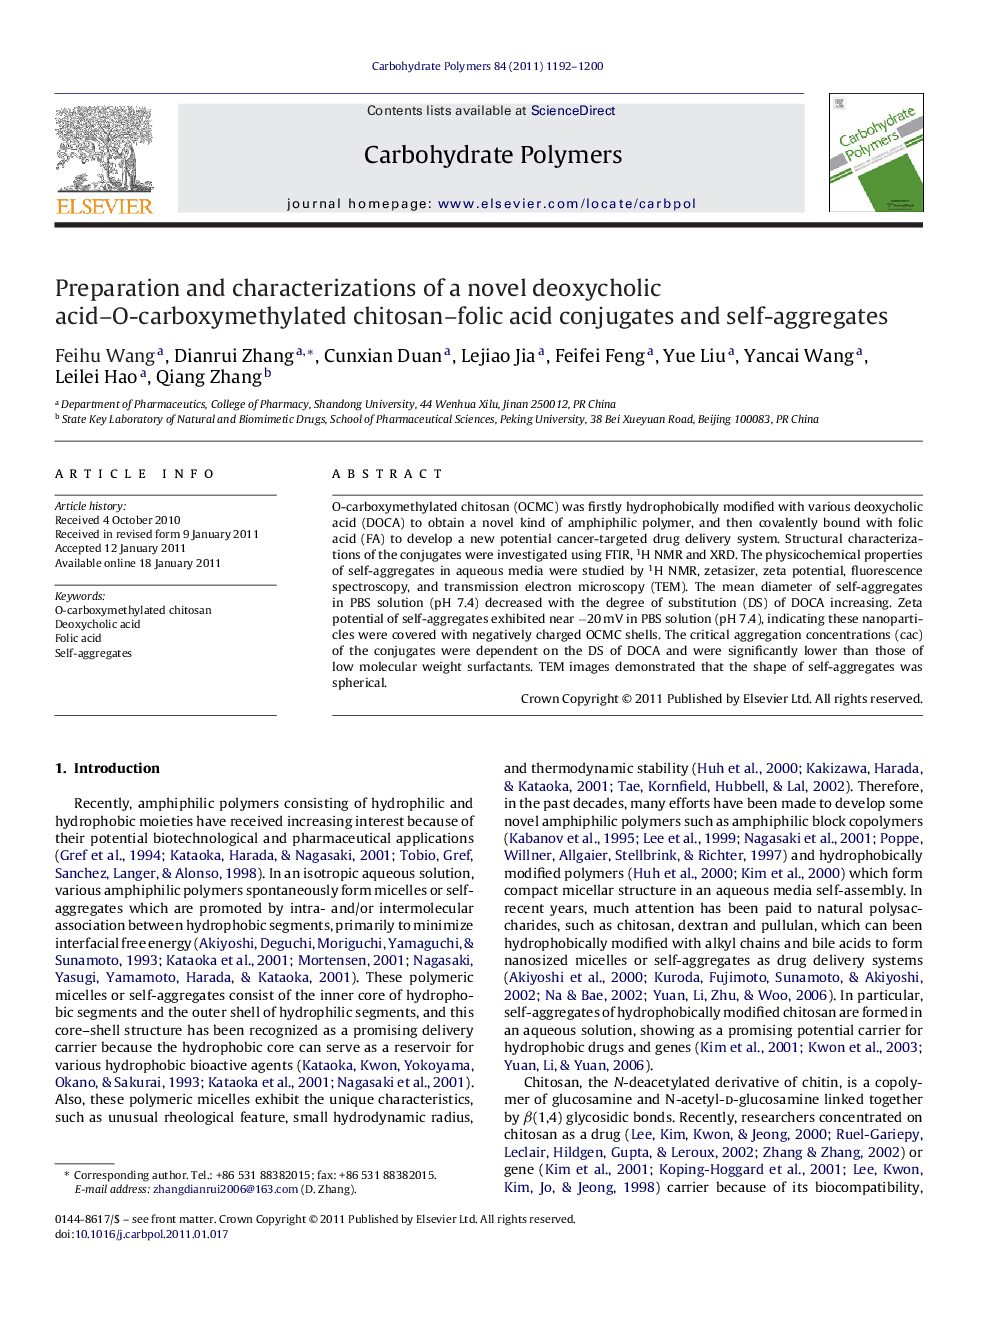 Preparation and characterizations of a novel deoxycholic acid–O-carboxymethylated chitosan–folic acid conjugates and self-aggregates